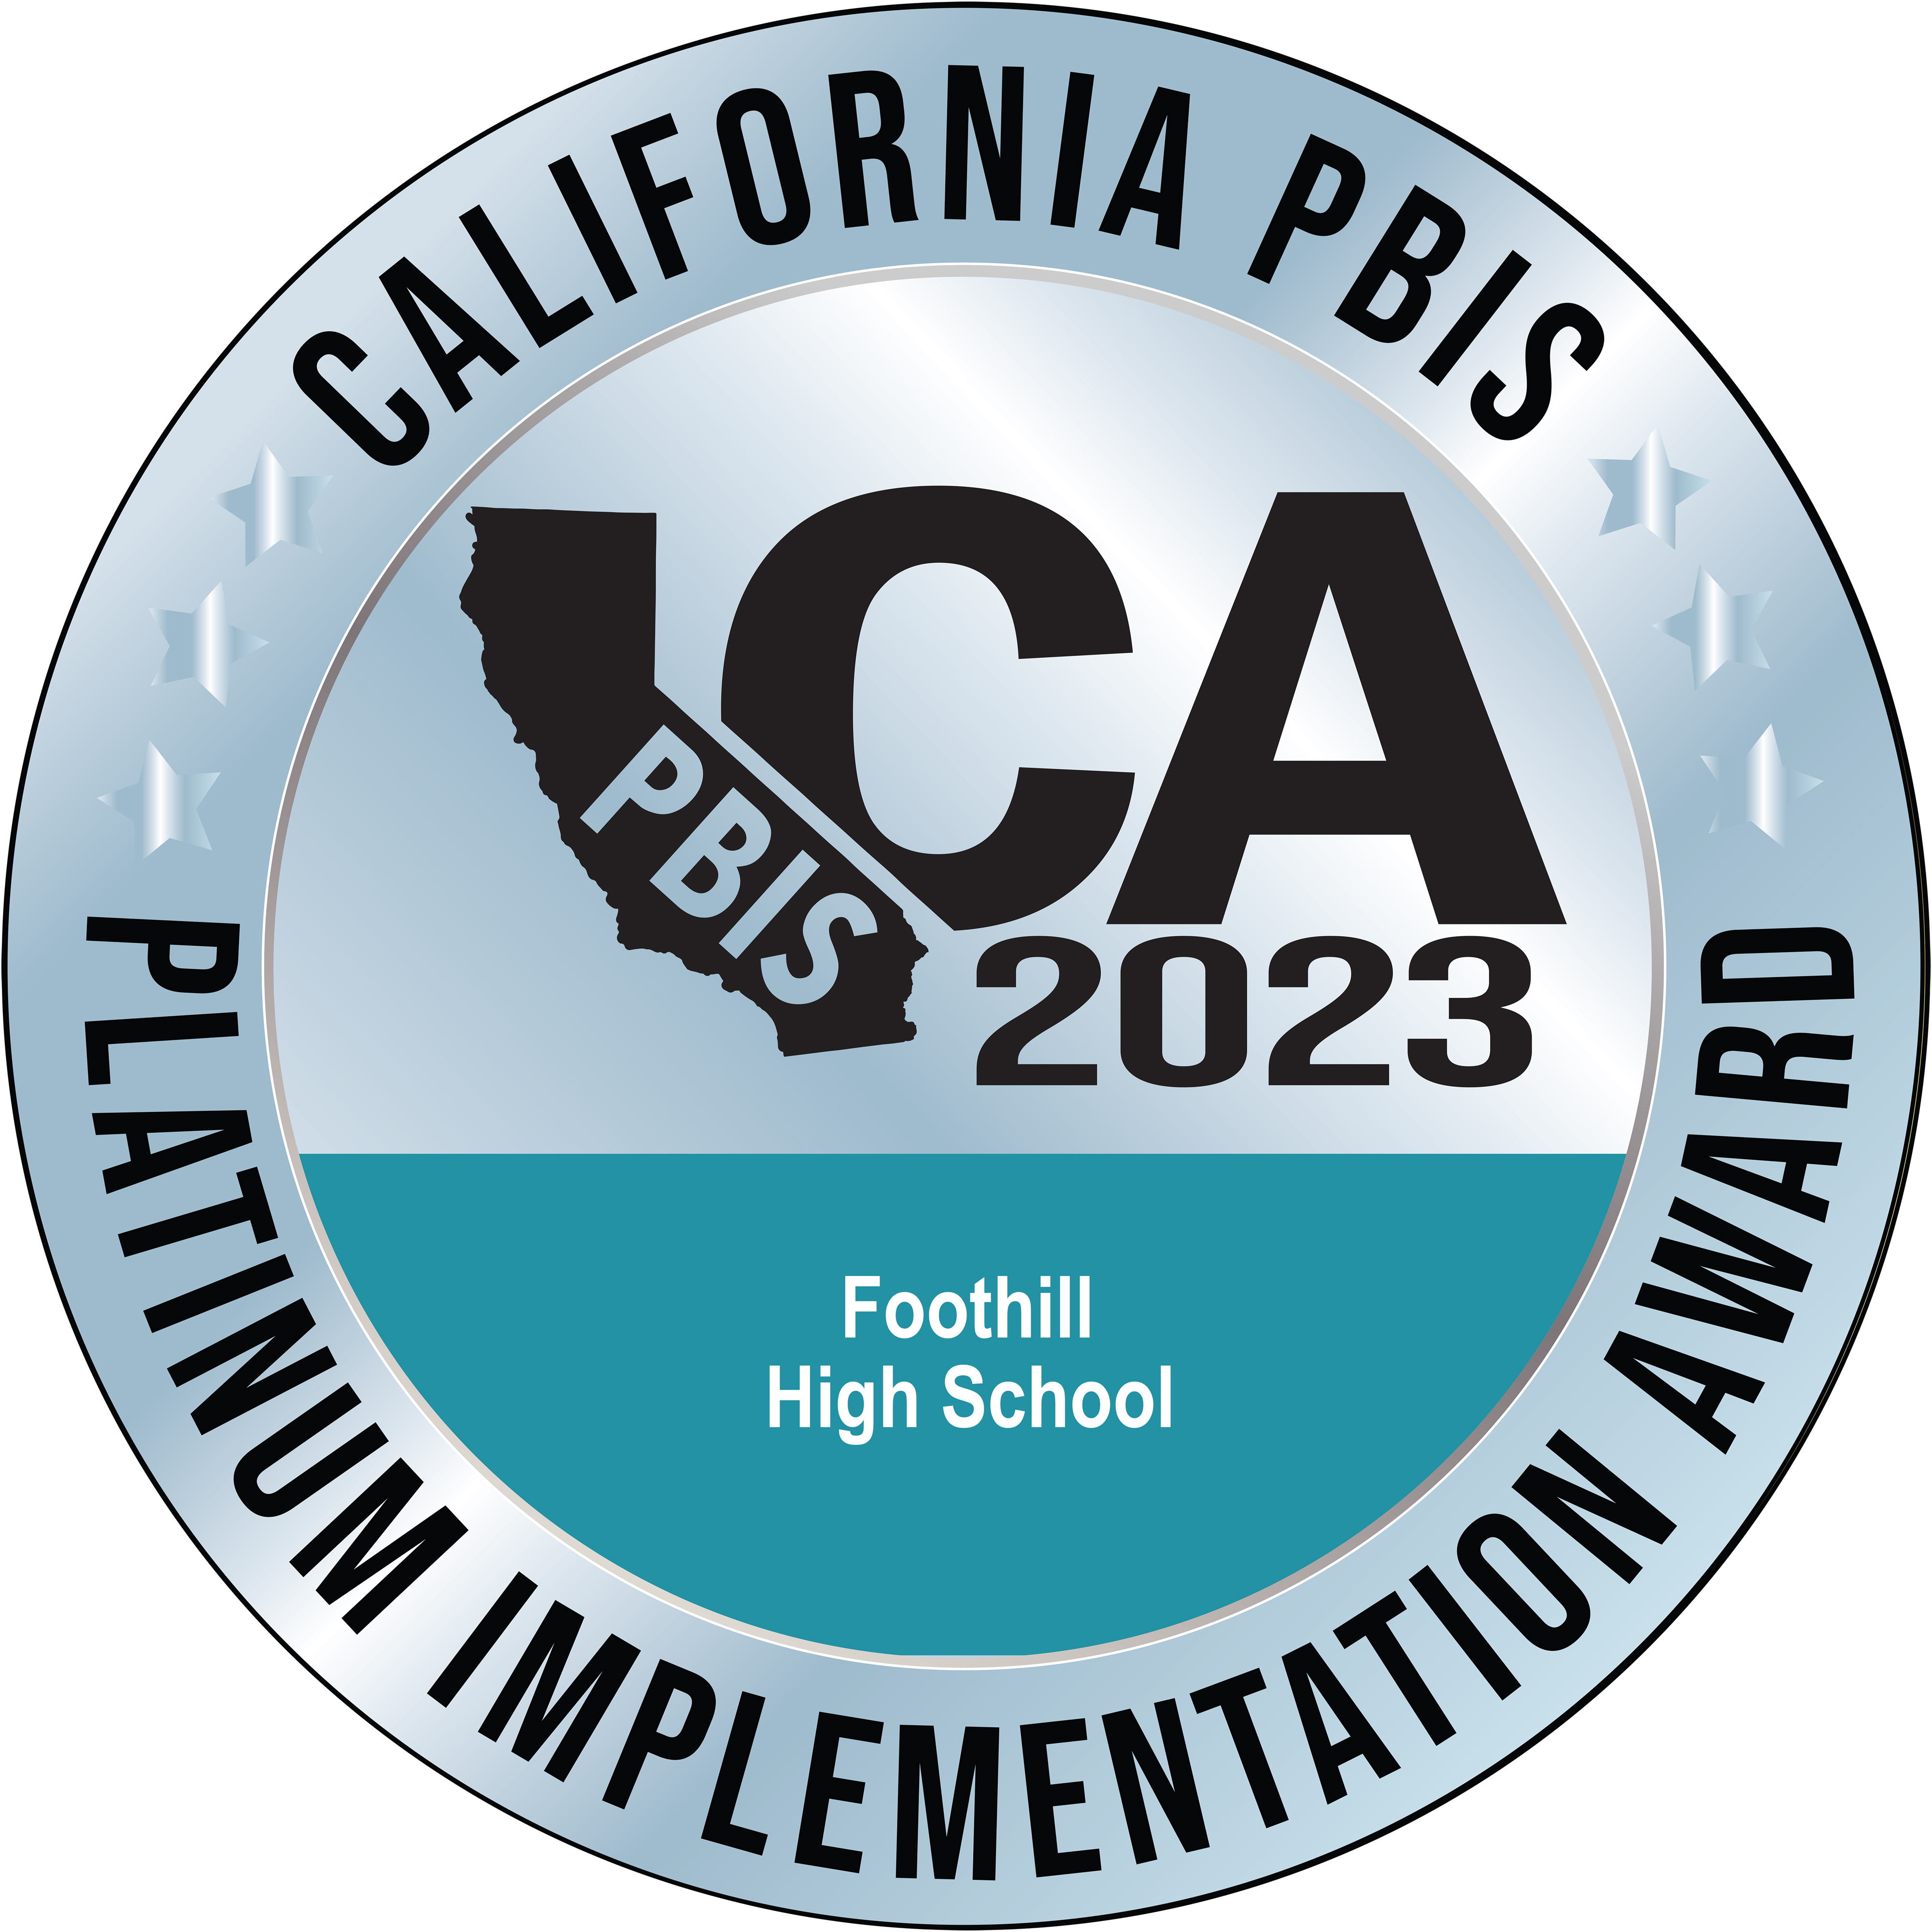 2022-2023 Platinum Award from the California PBIS Coalition.